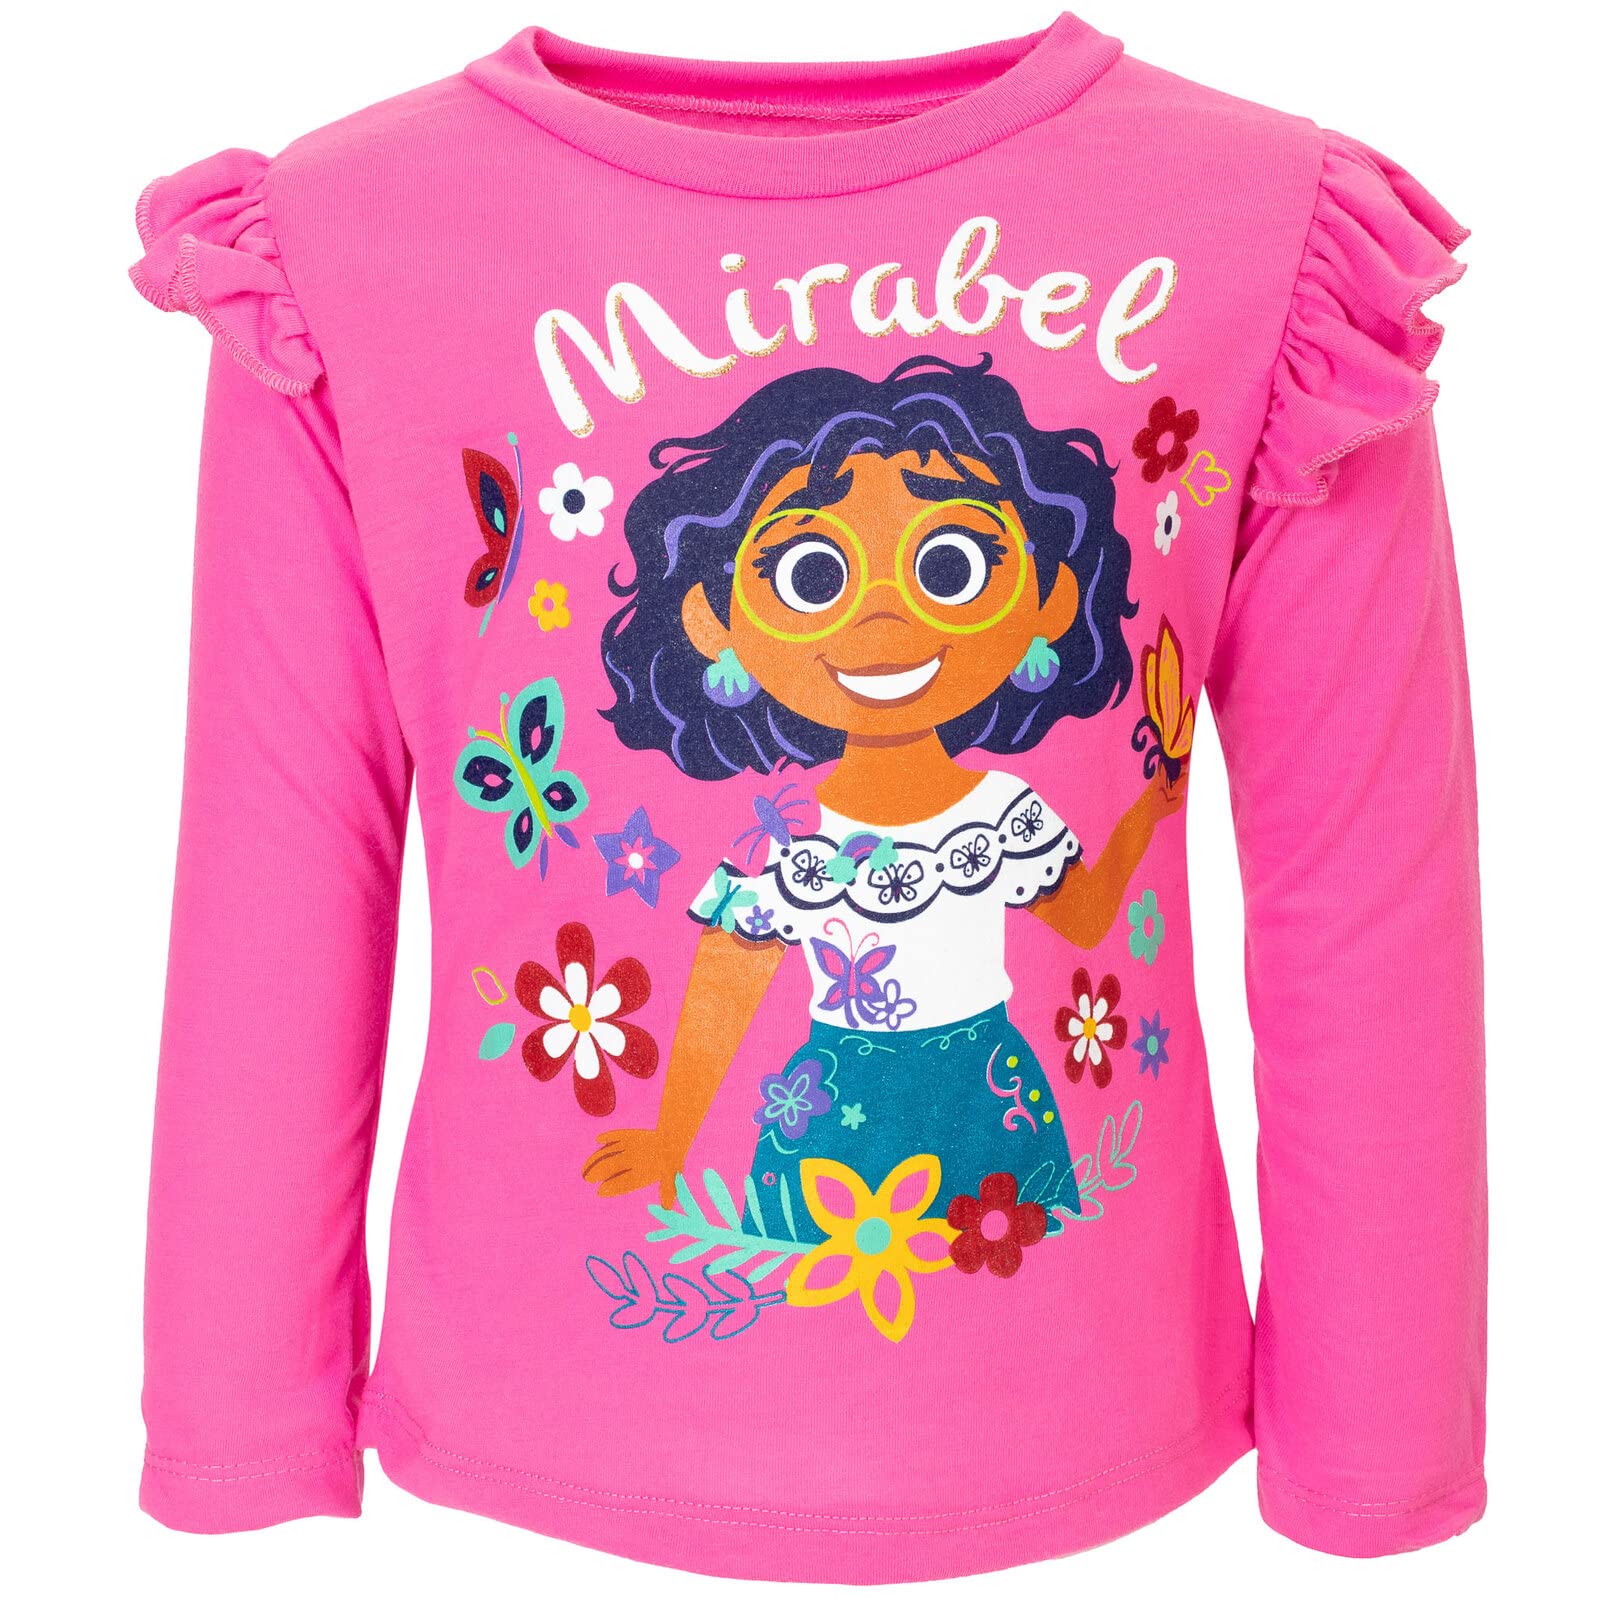 Disney Encanto Mirabel Little Girls T-Shirt and Leggings Outfit Set Pink 6